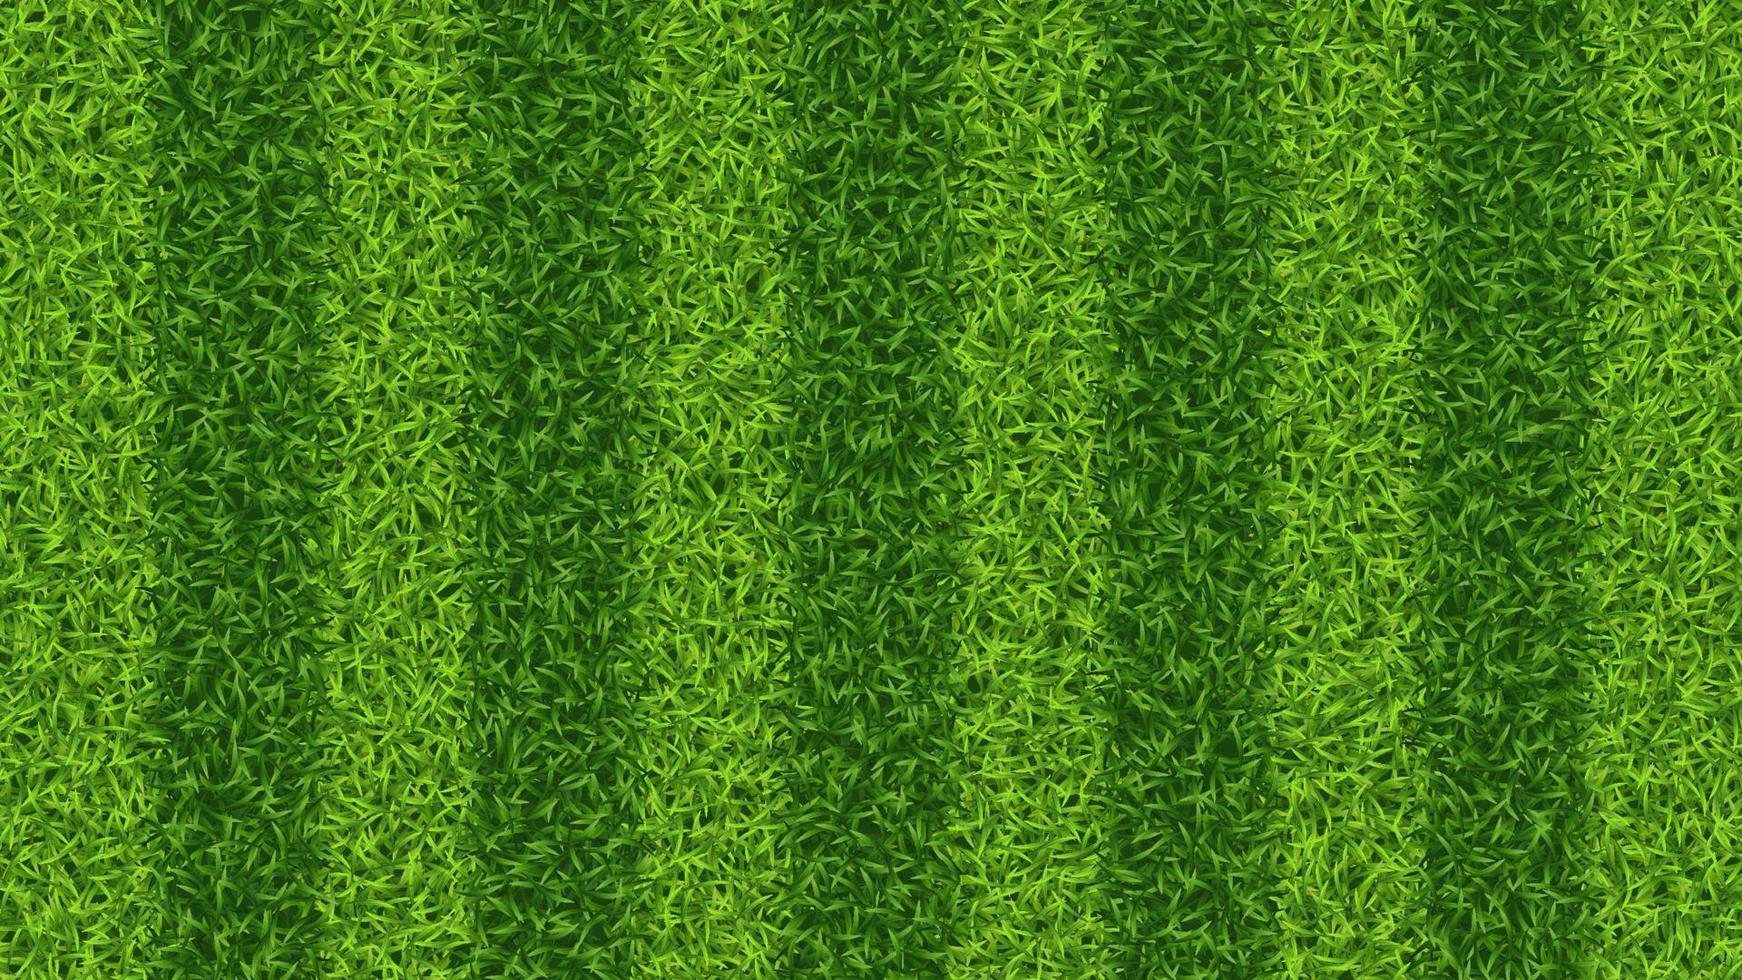 rayé football Football herbe champ vecteur texture. vert herbe modèle pour sport Contexte